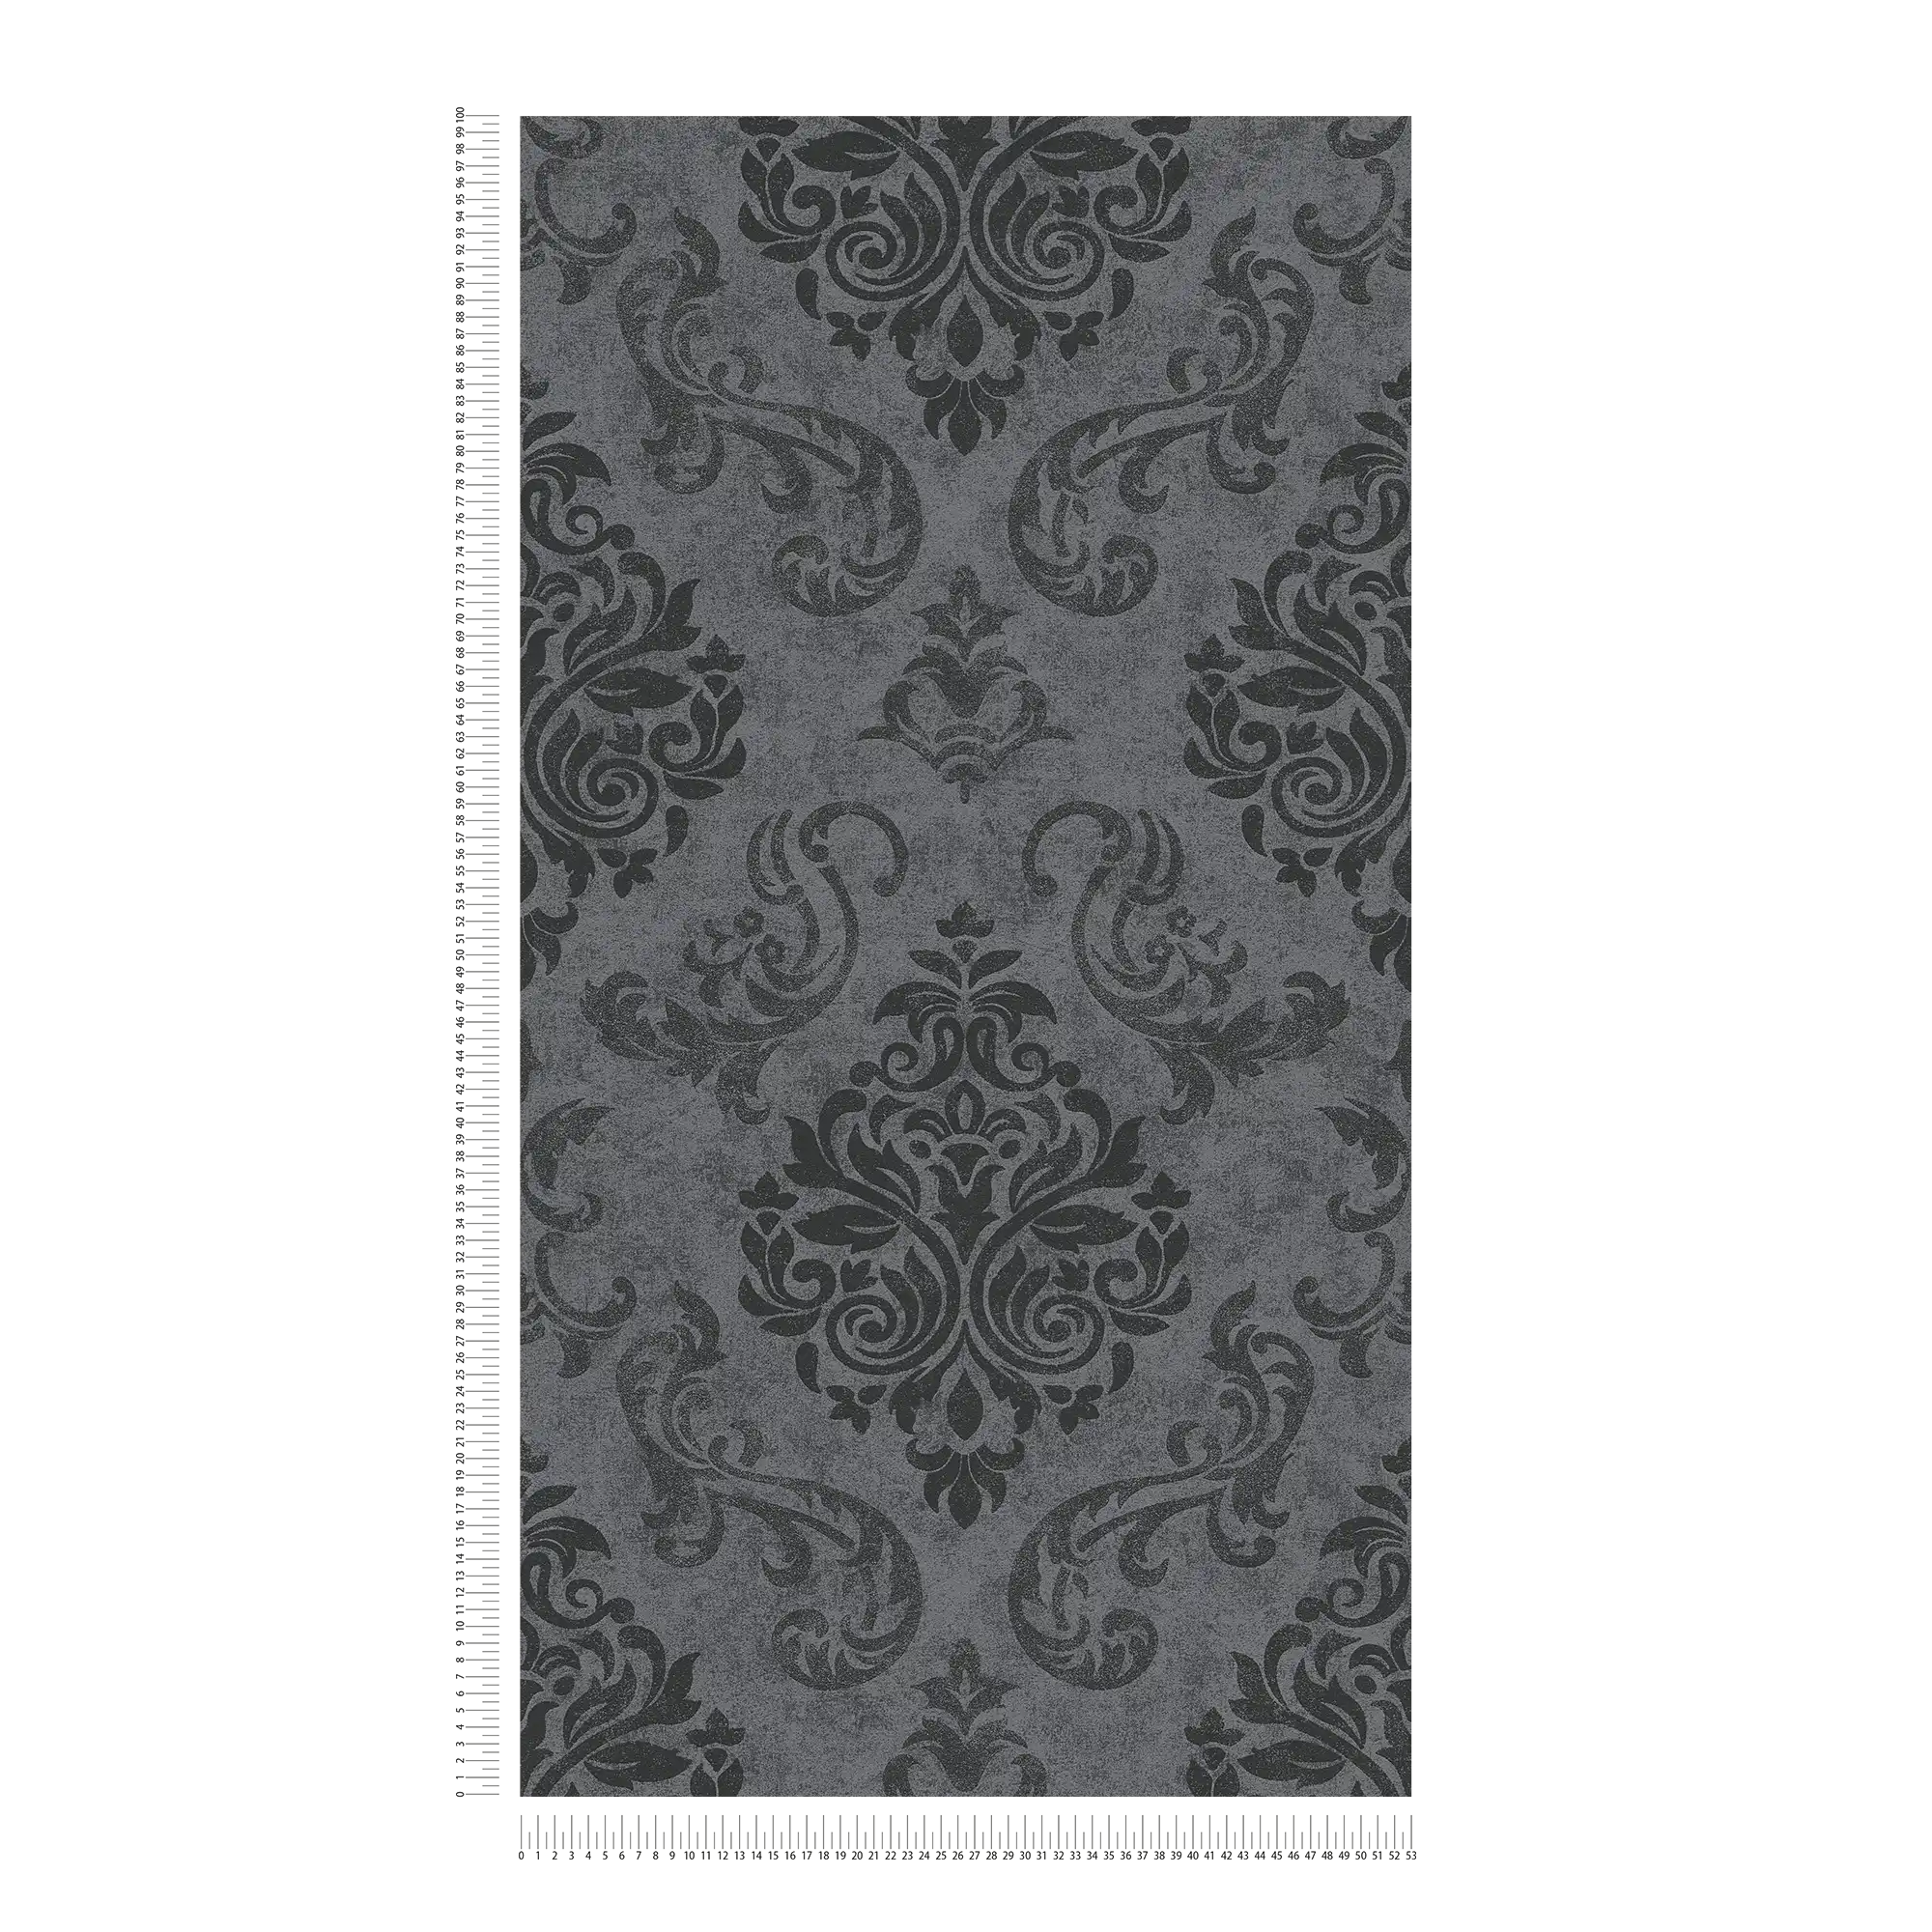             Ornamente Tapete Barock Stil mit Glitzereffekt – Grau, Metallic, Schwarz
        